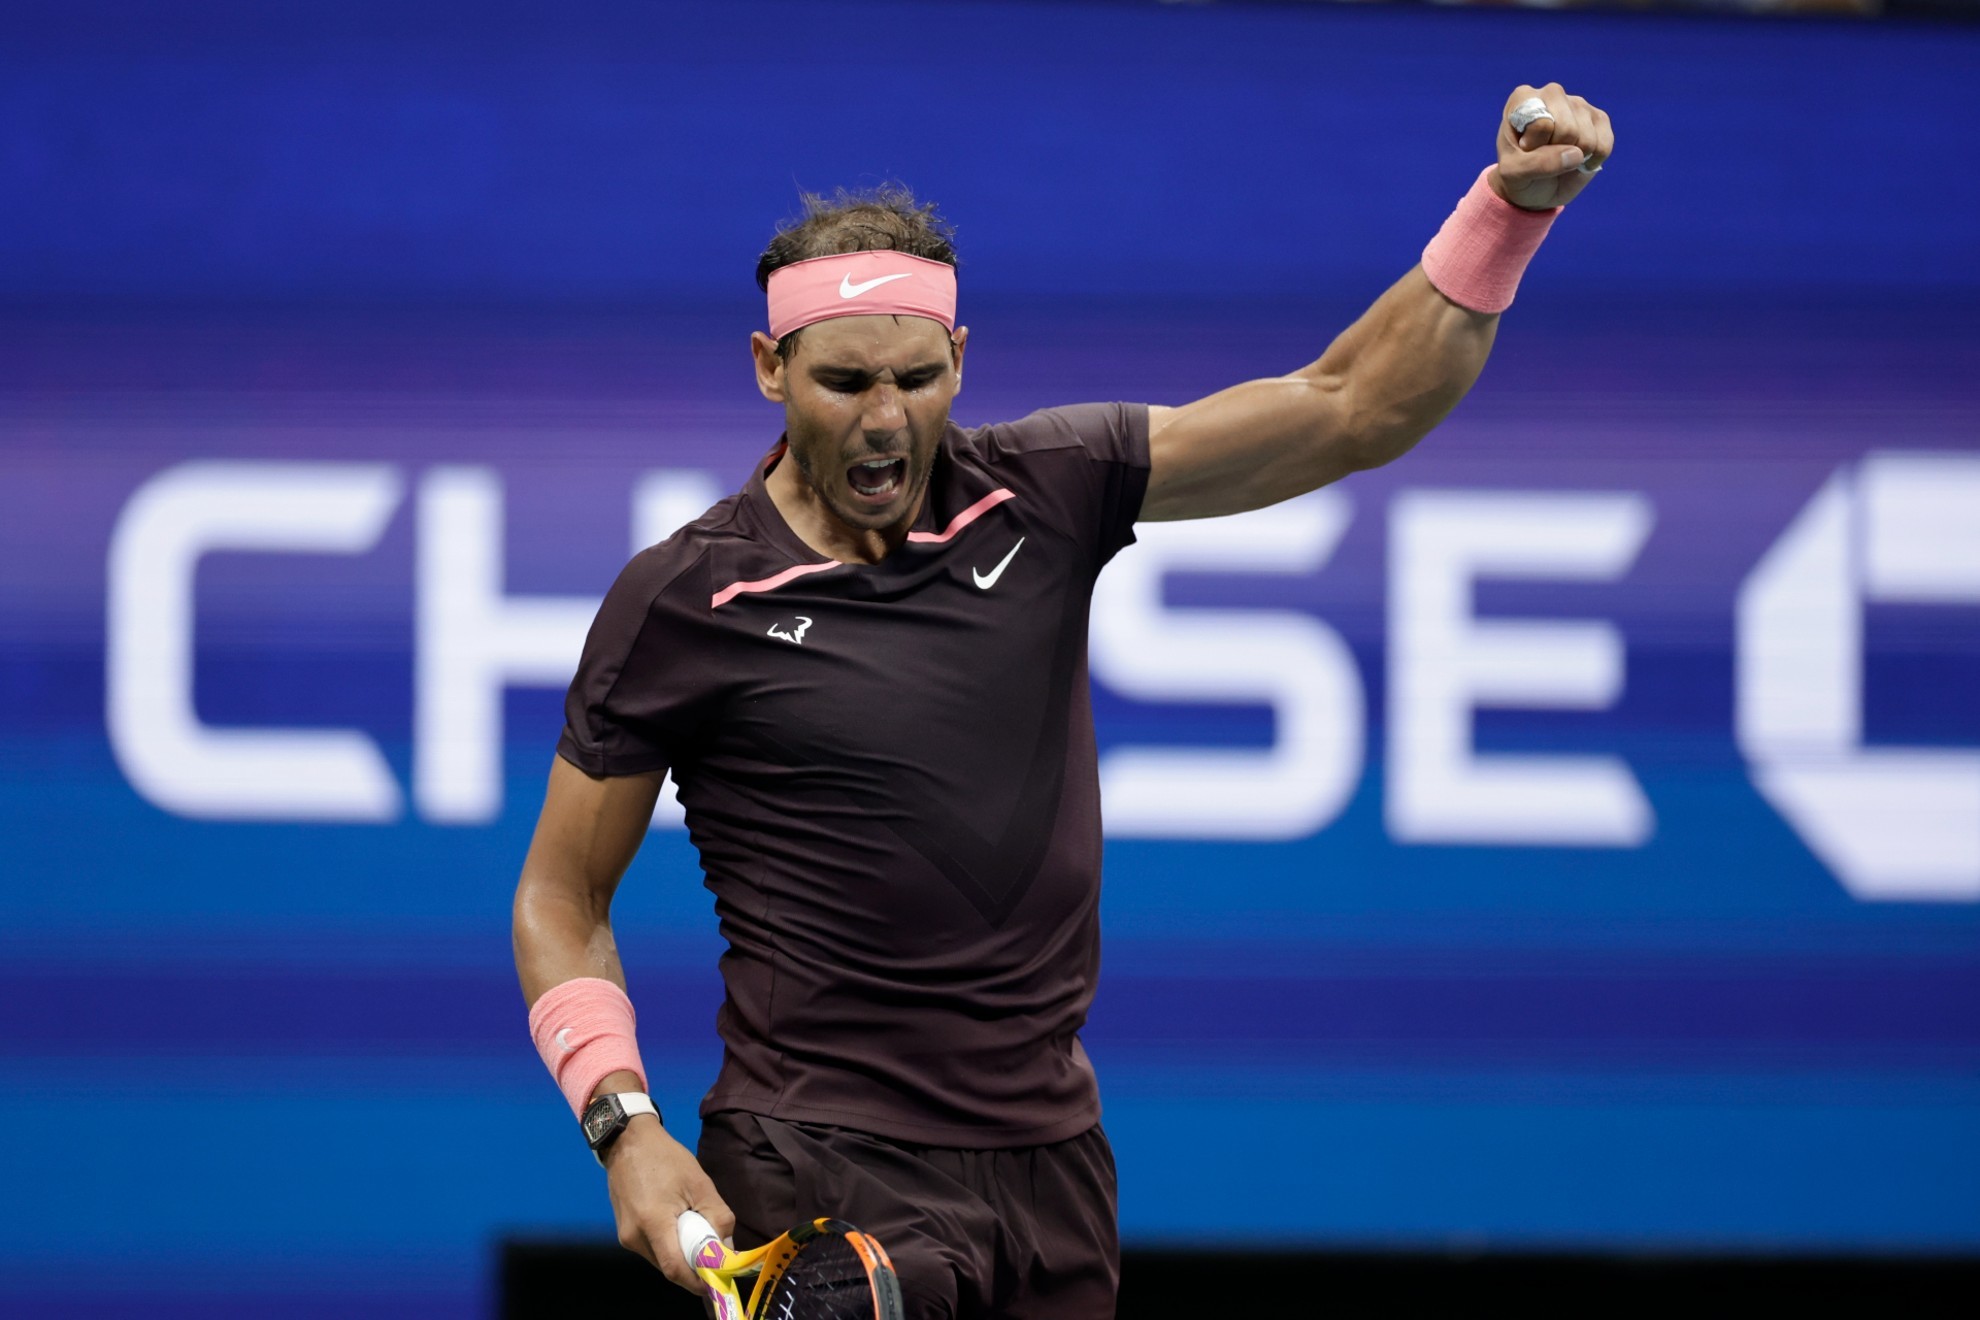 Rafael Nadal celebrates after winning his match against Richard Gasquet. / AP